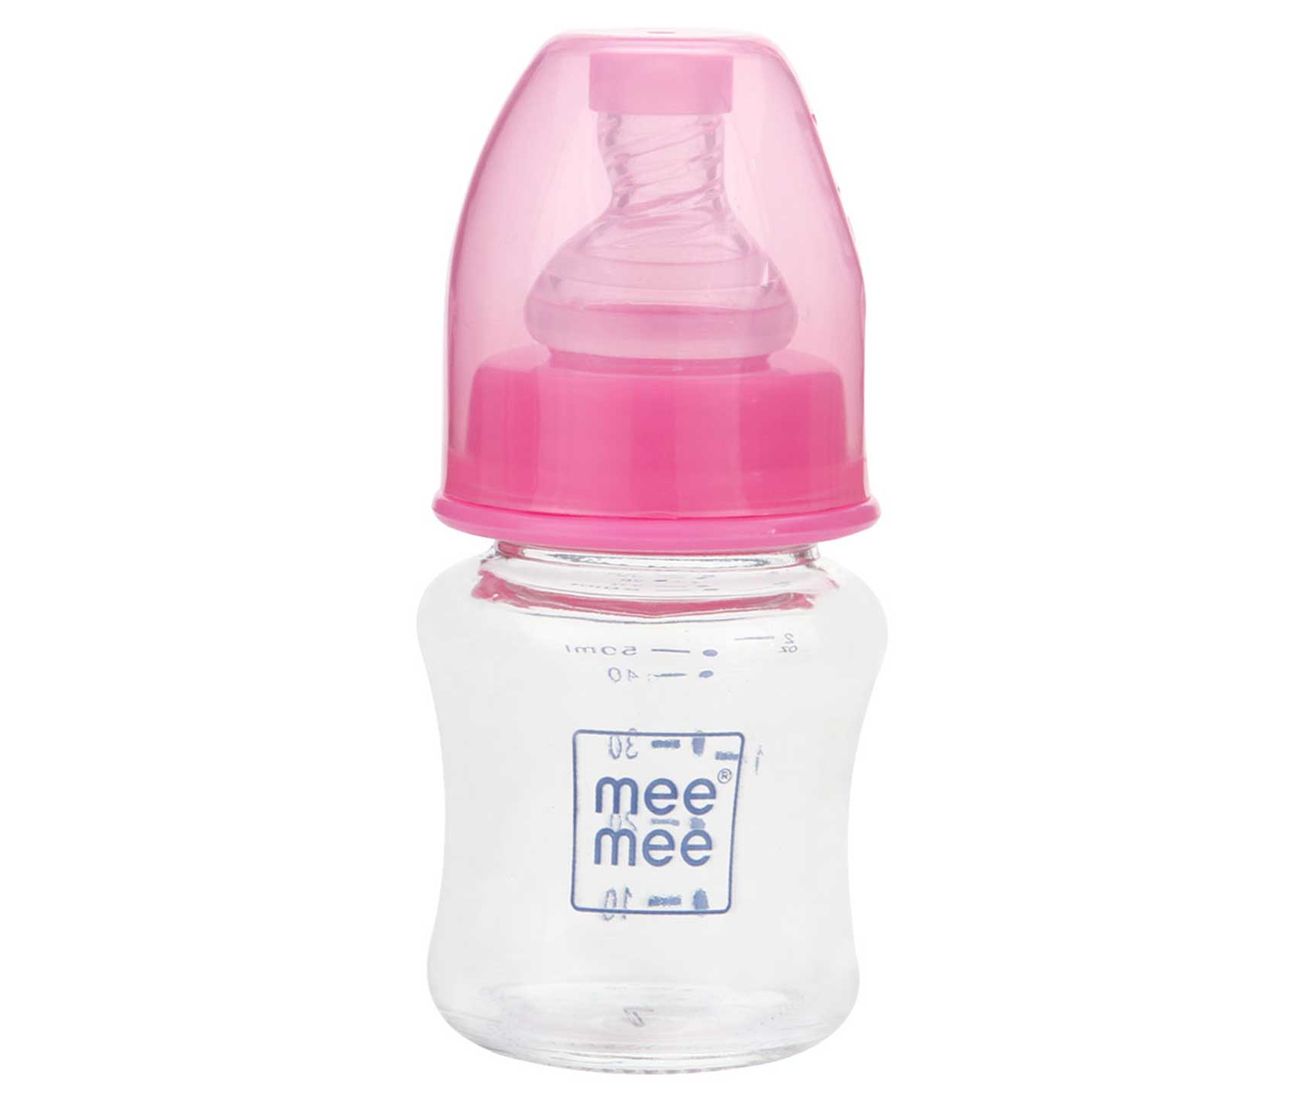 MEE MEE Premium glass feeding bottle for babies, 50ml